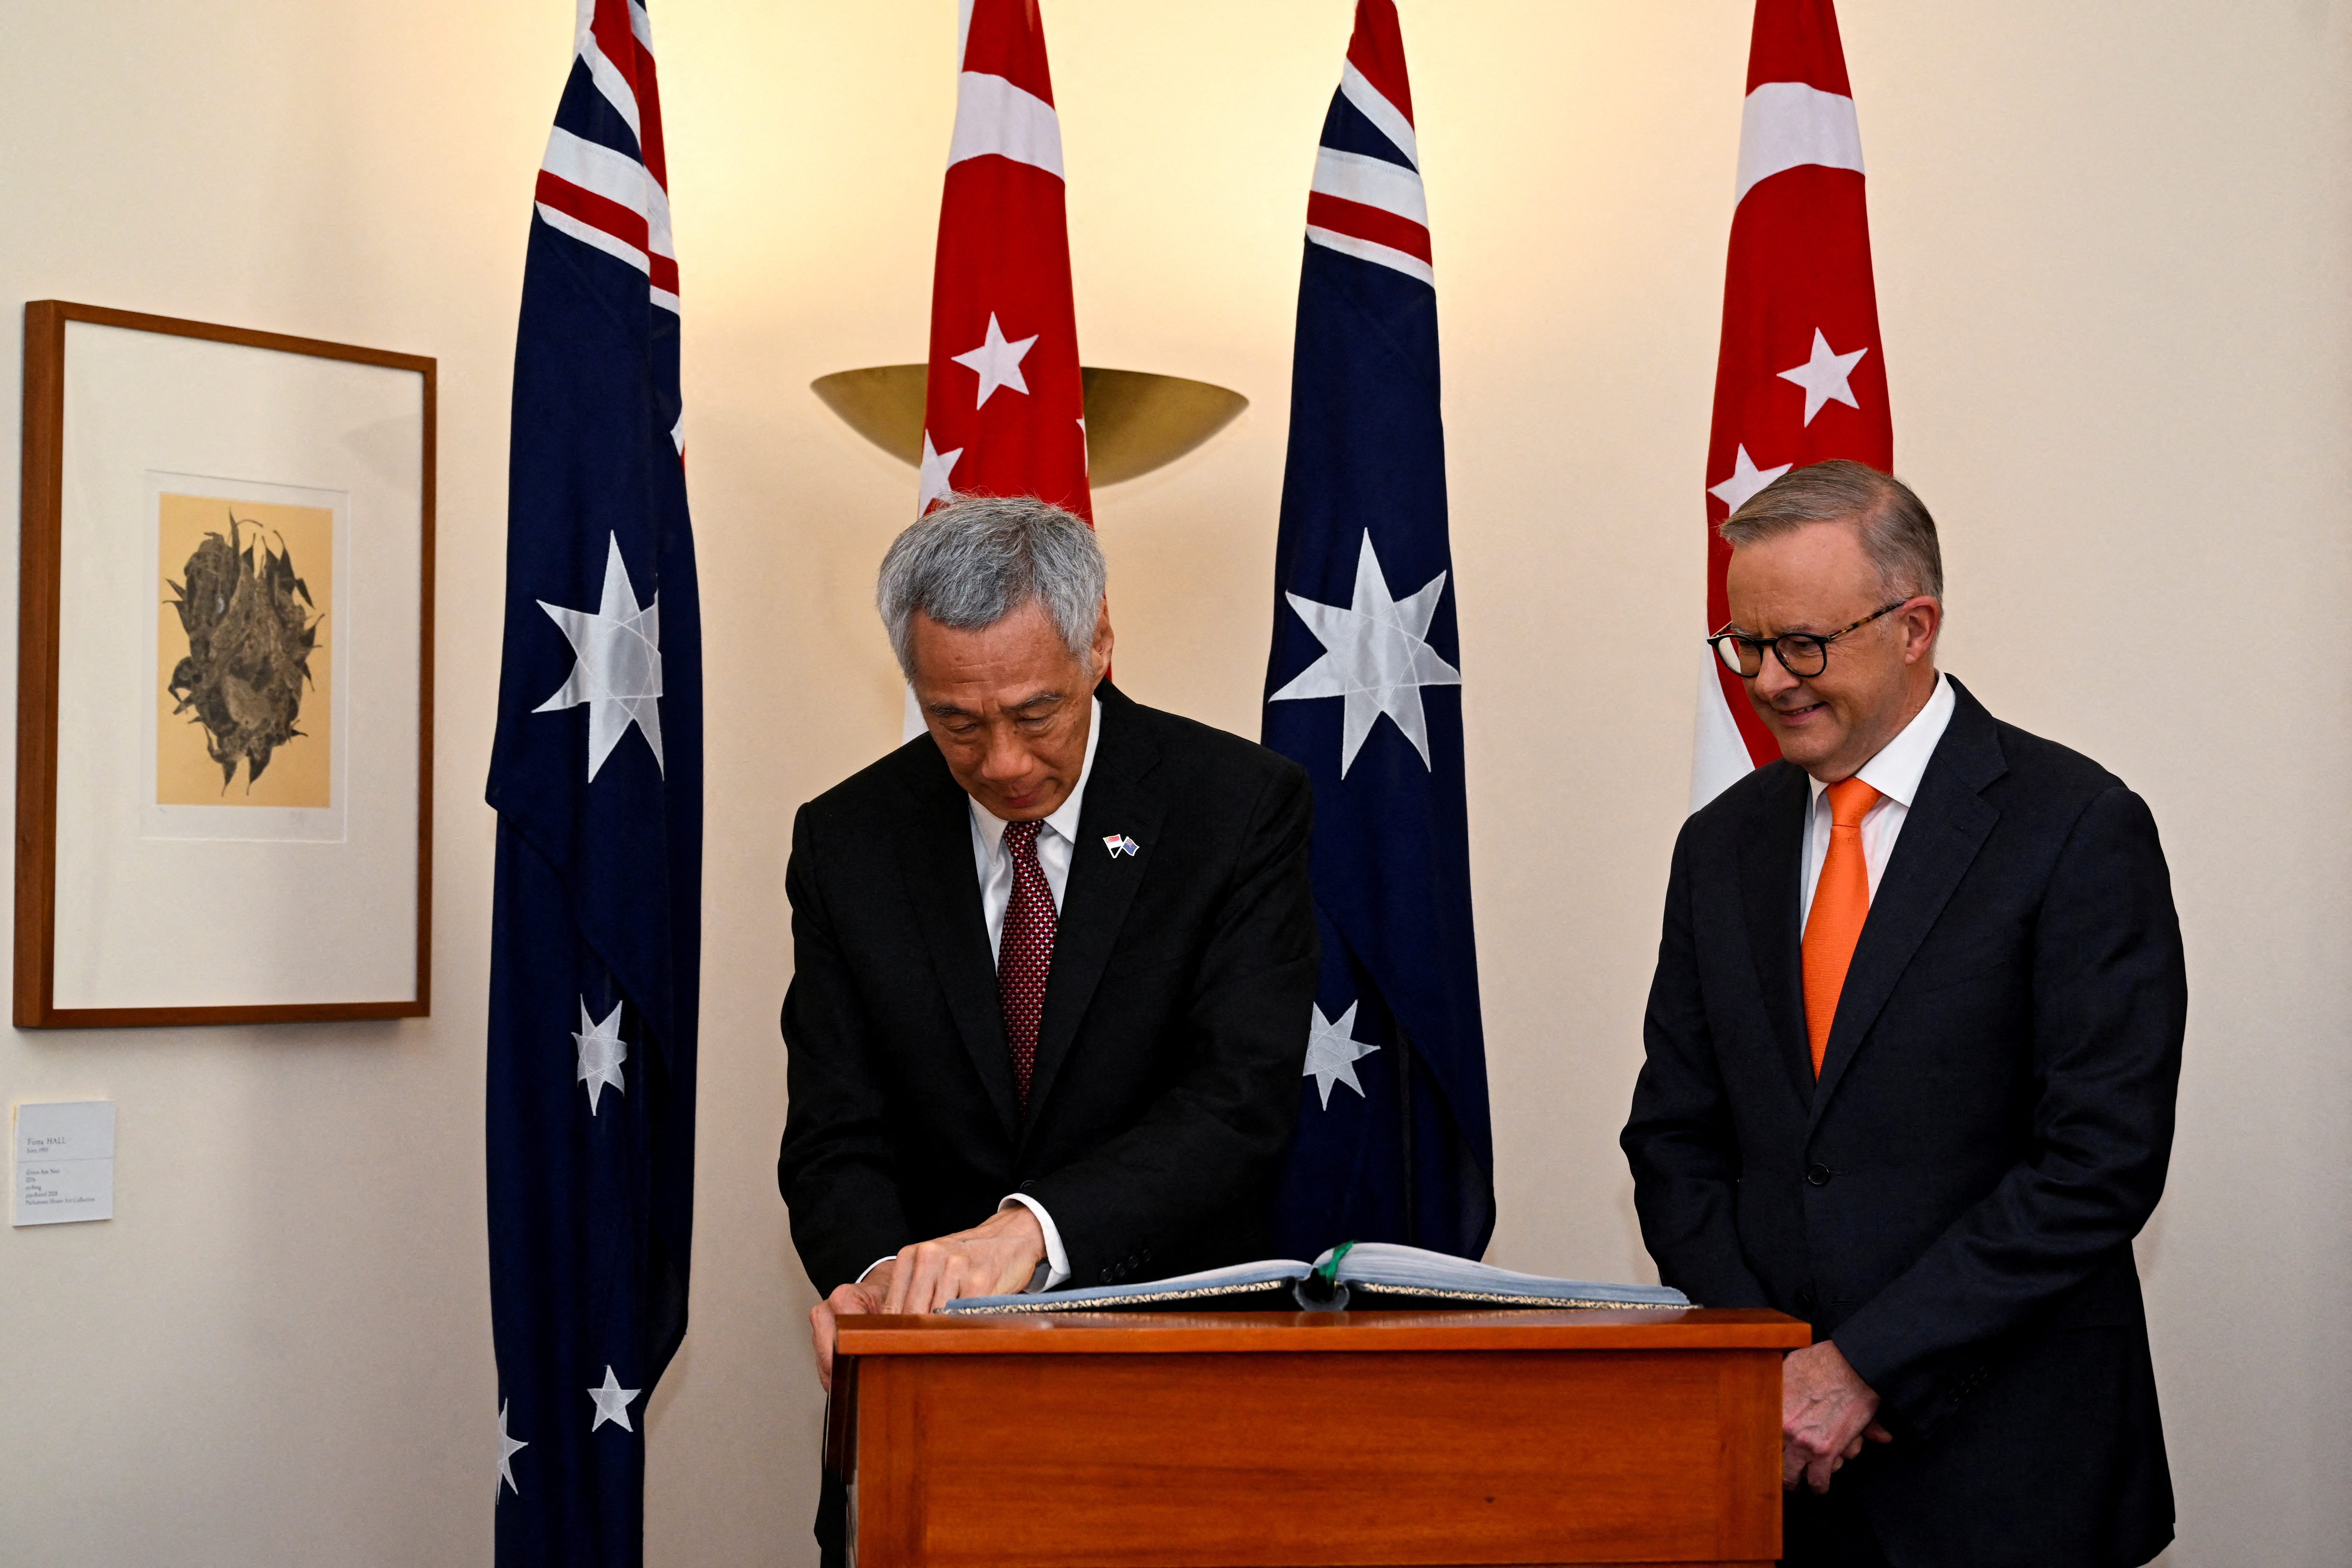 Singapore's PM Lee Hsien Loong visits Australia